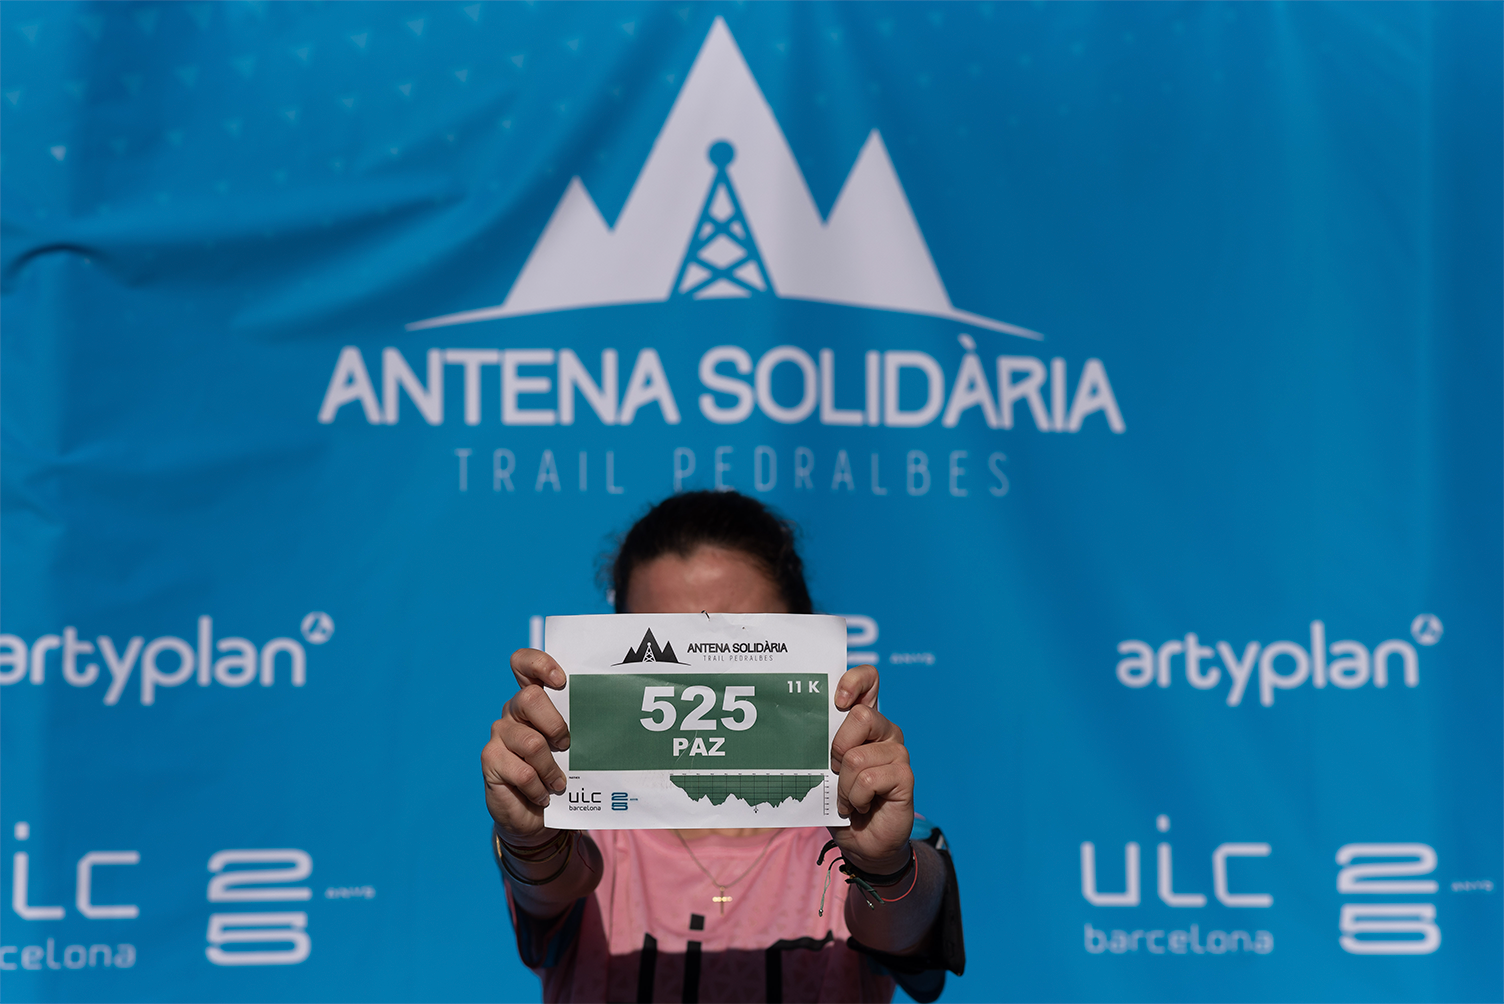 Trail Pedralbes Antena Solidaria